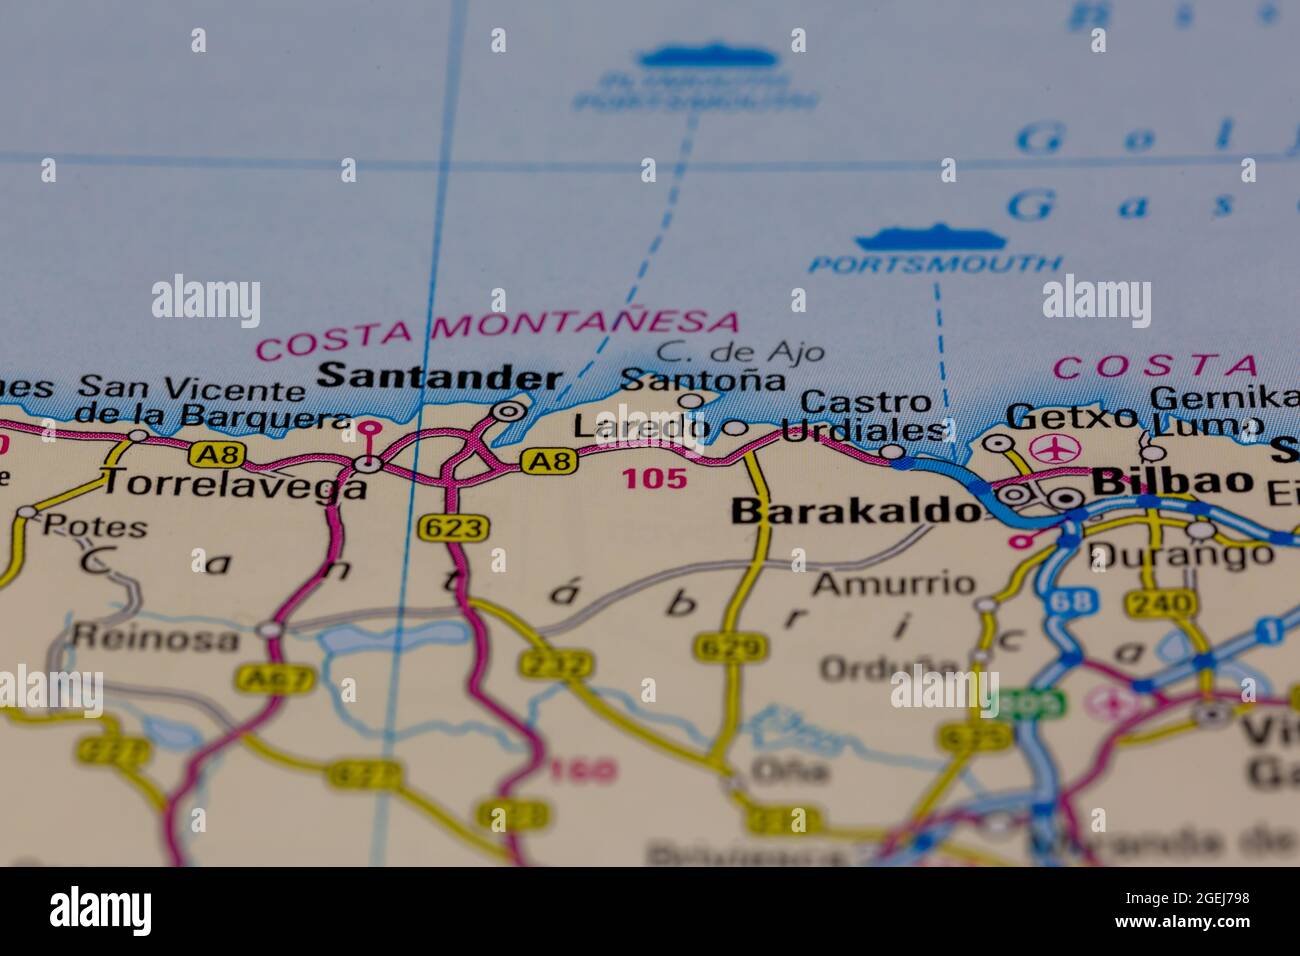 Laredo España aparece en un mapa de carreteras o en un mapa geográfico Foto de stock